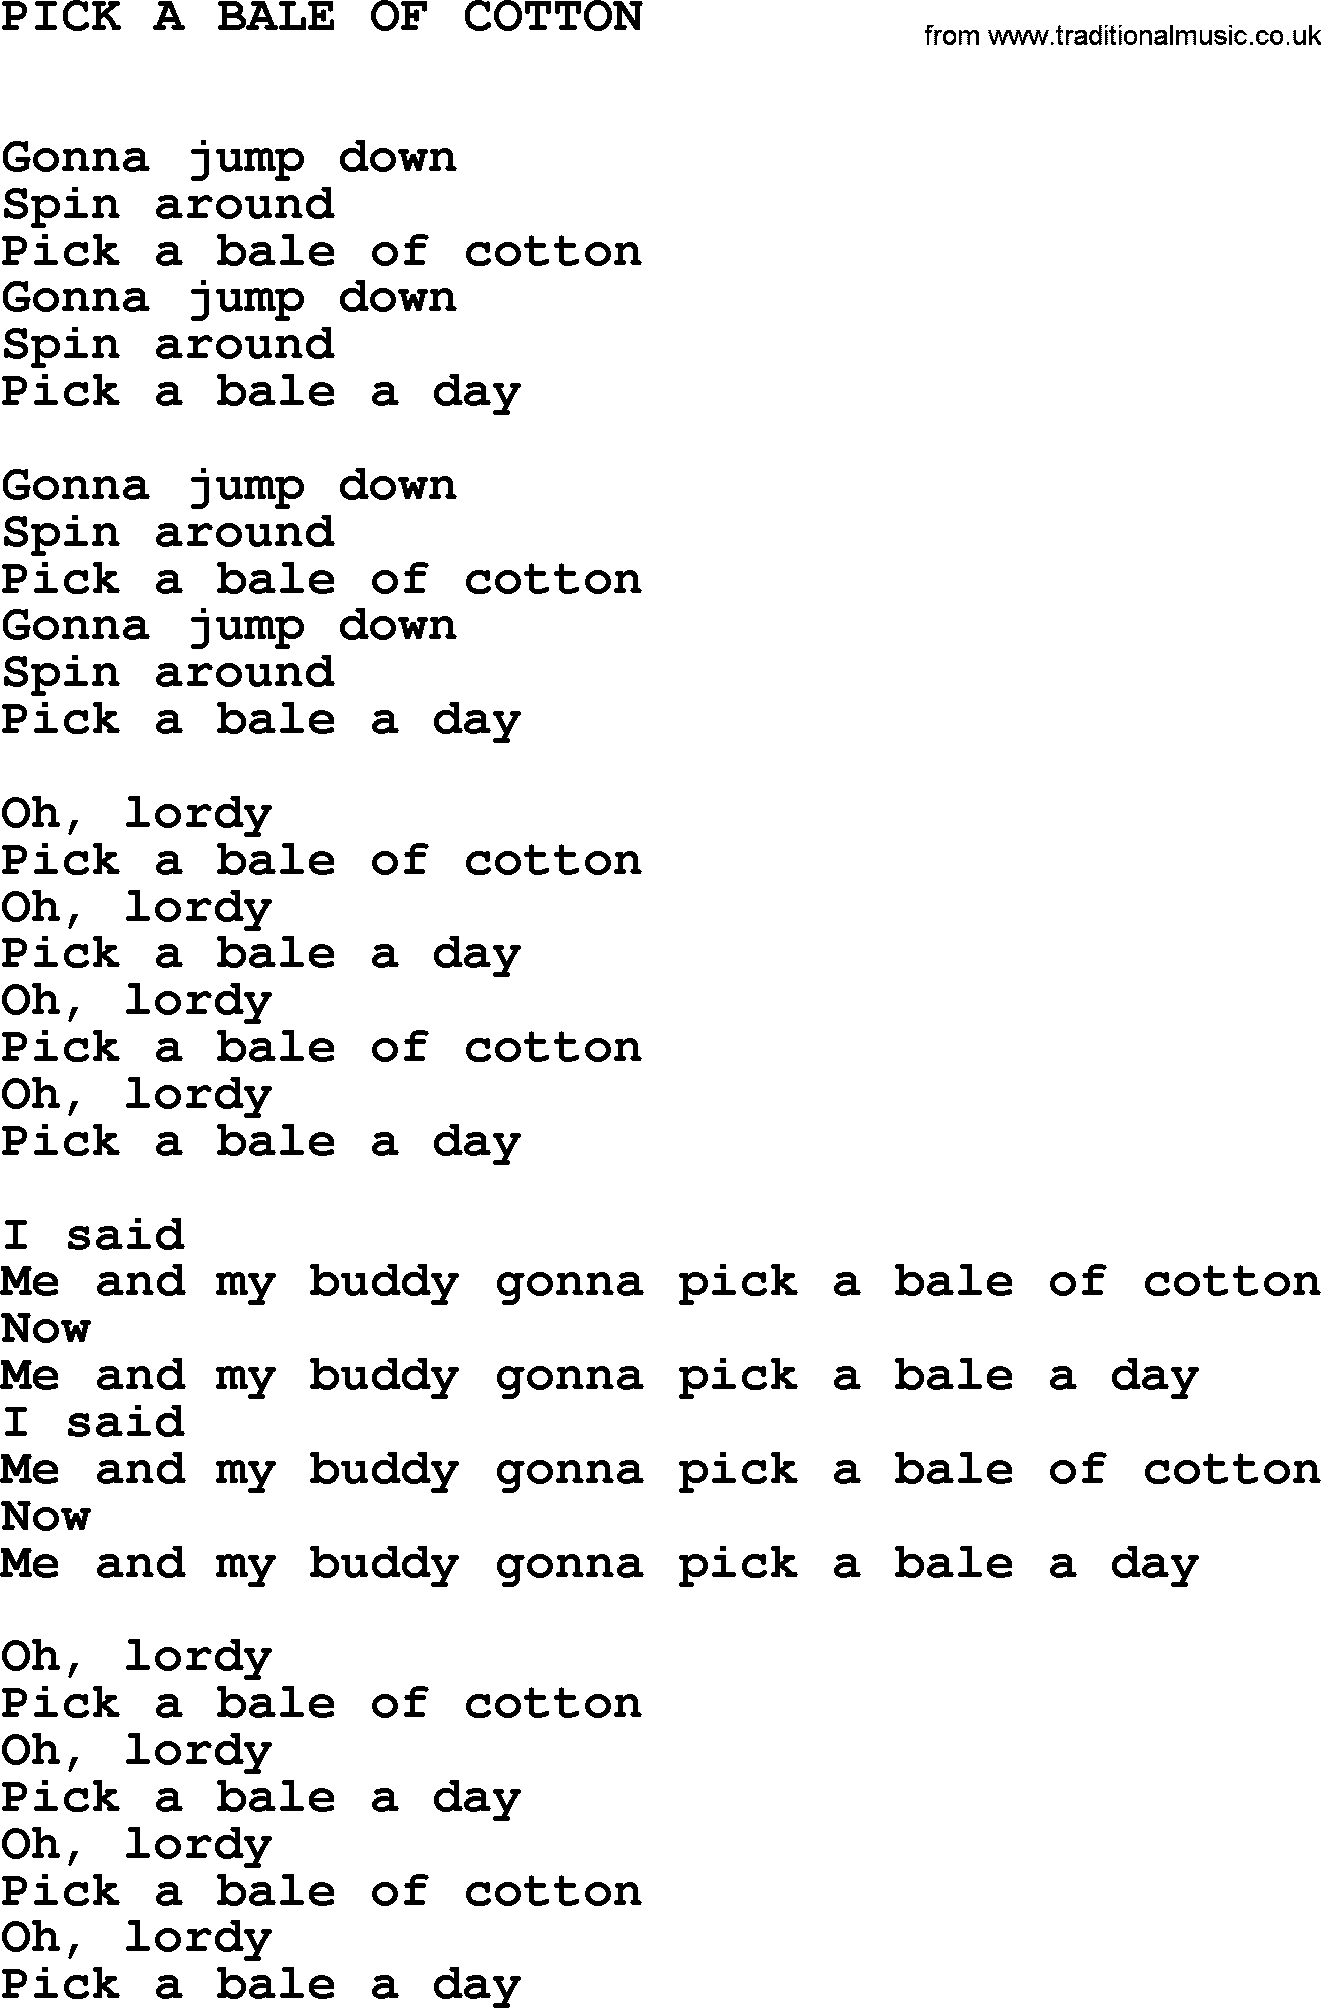 Johnny Cash song Pick A Bale Of Cotton.txt lyrics